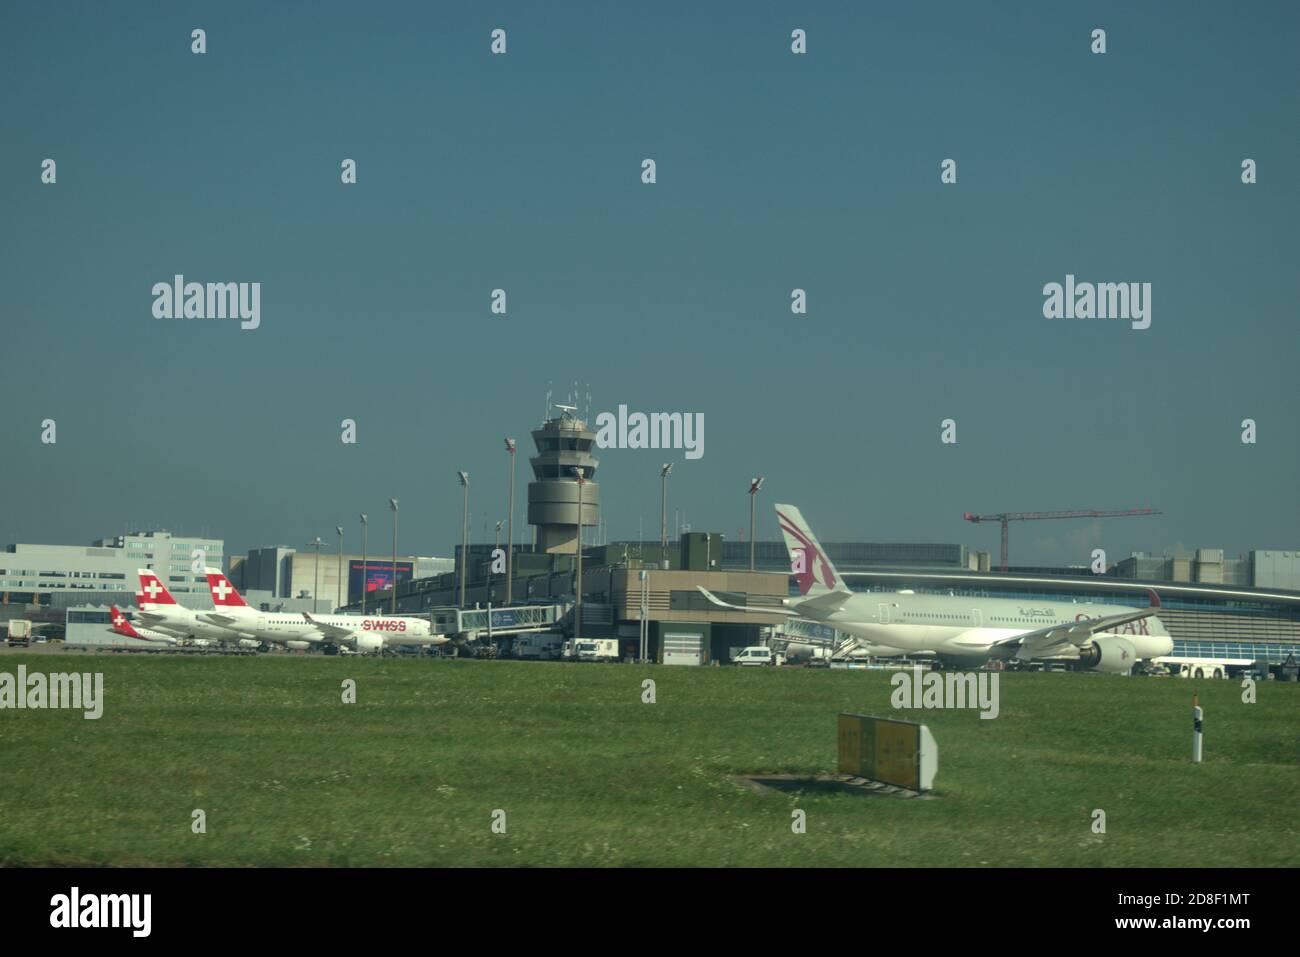 Qatar airwais Airbus A250 is parking at the Zurich international airport in  Switzerland 17.9.2020 Stock Photo - Alamy